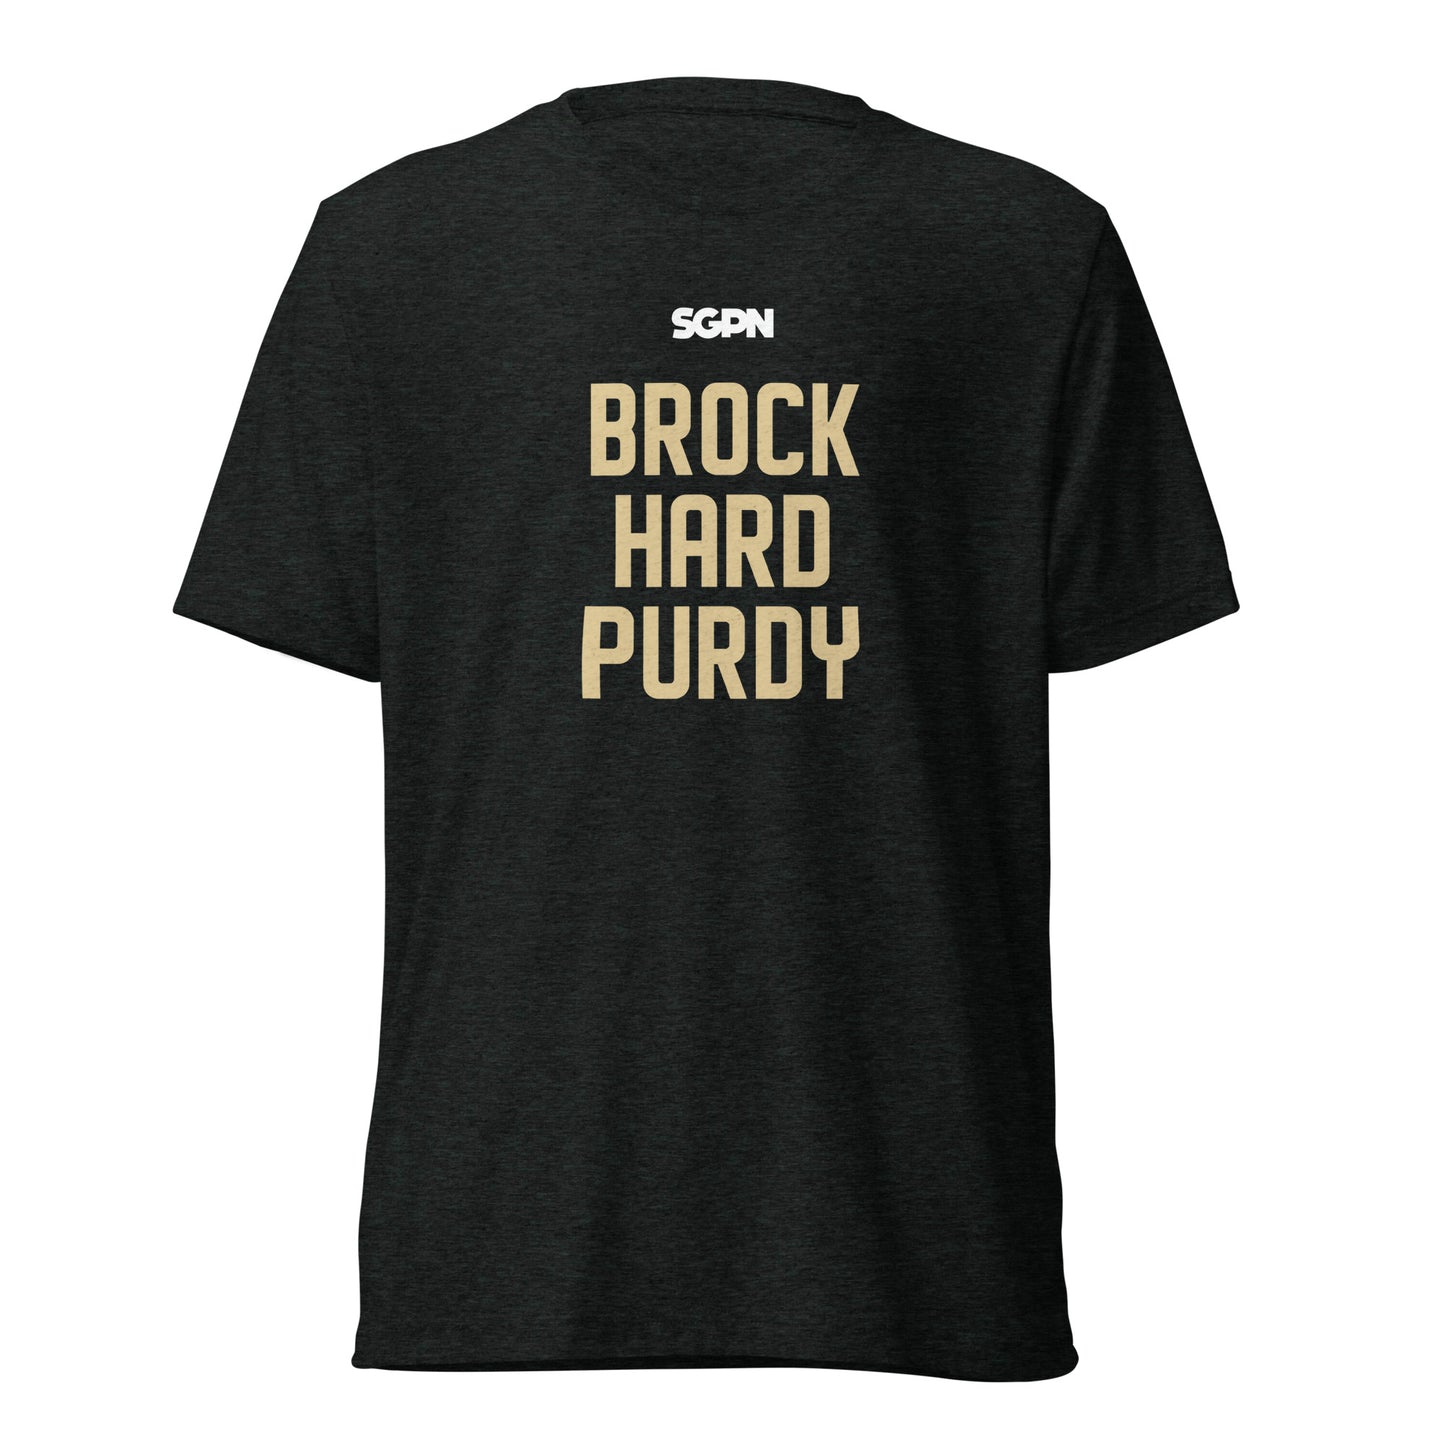 Brock Hard Purdy - SGPN - Short sleeve t-shirt